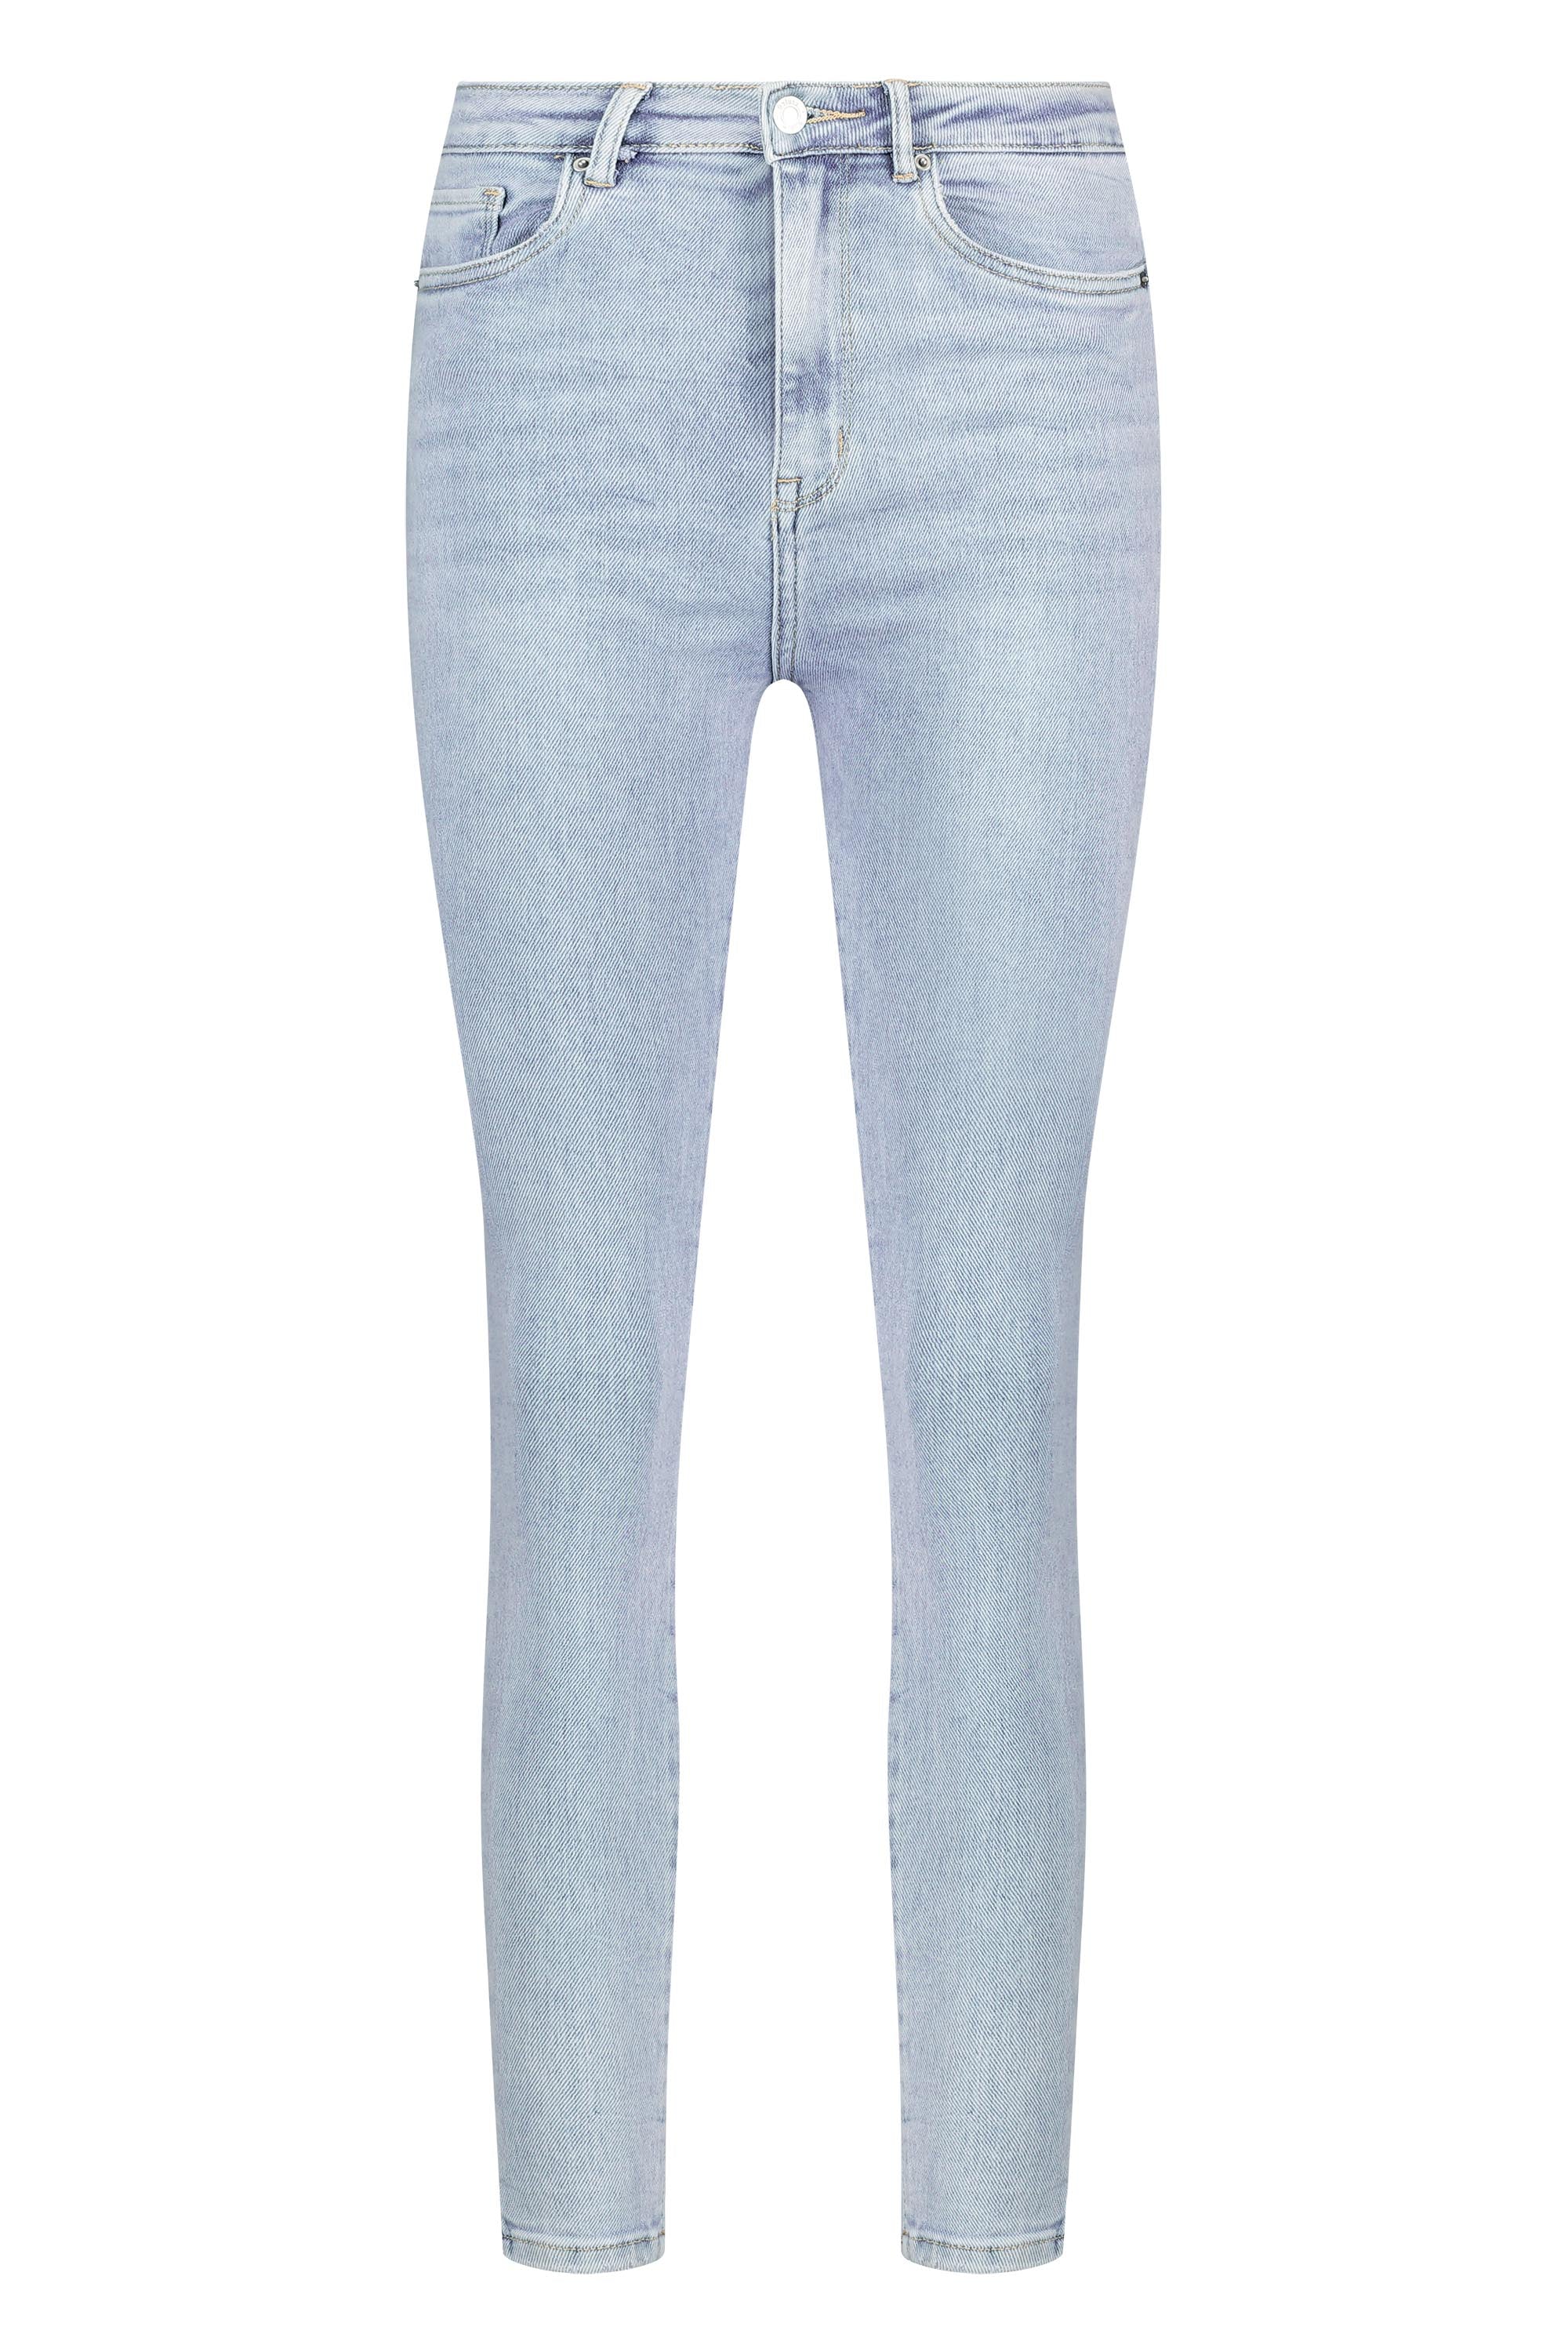 Skinny jeans stretch light blue